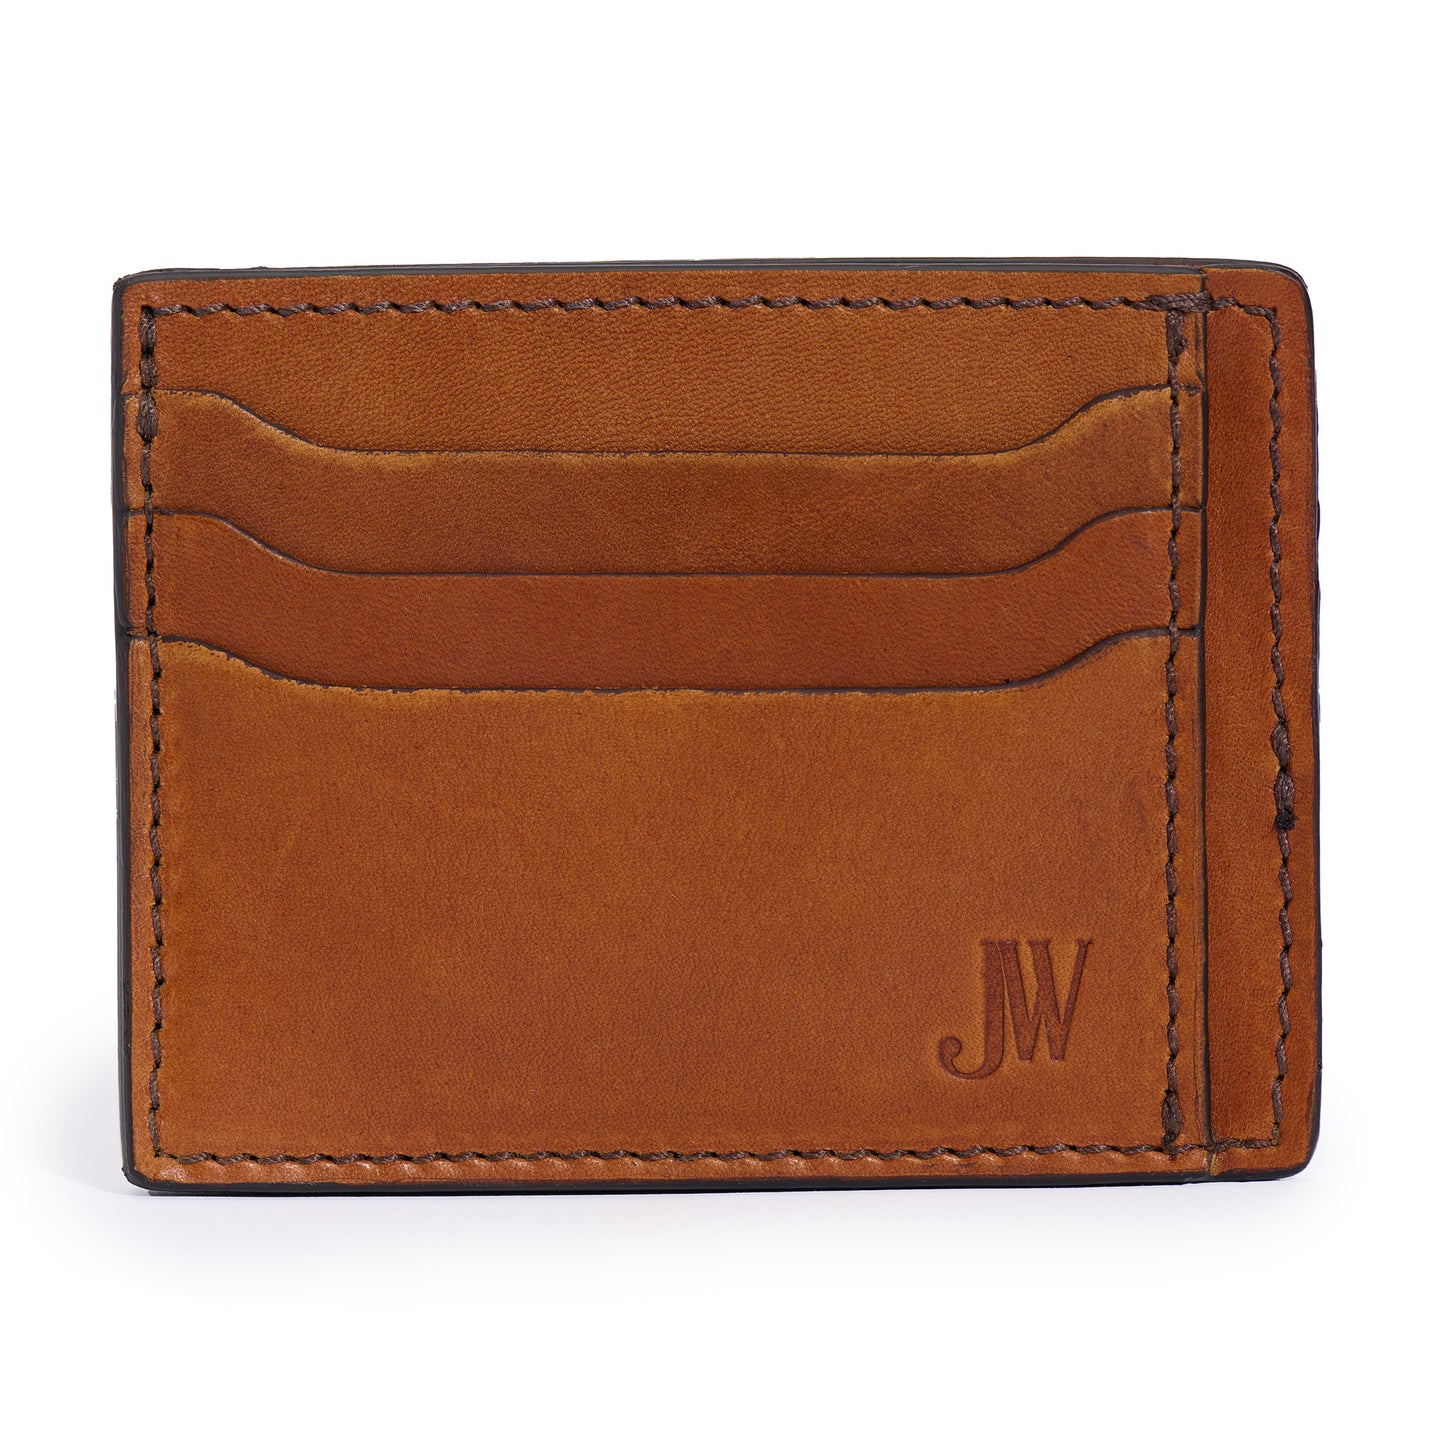 full grain slim leather wallet saddle tan color back with logo